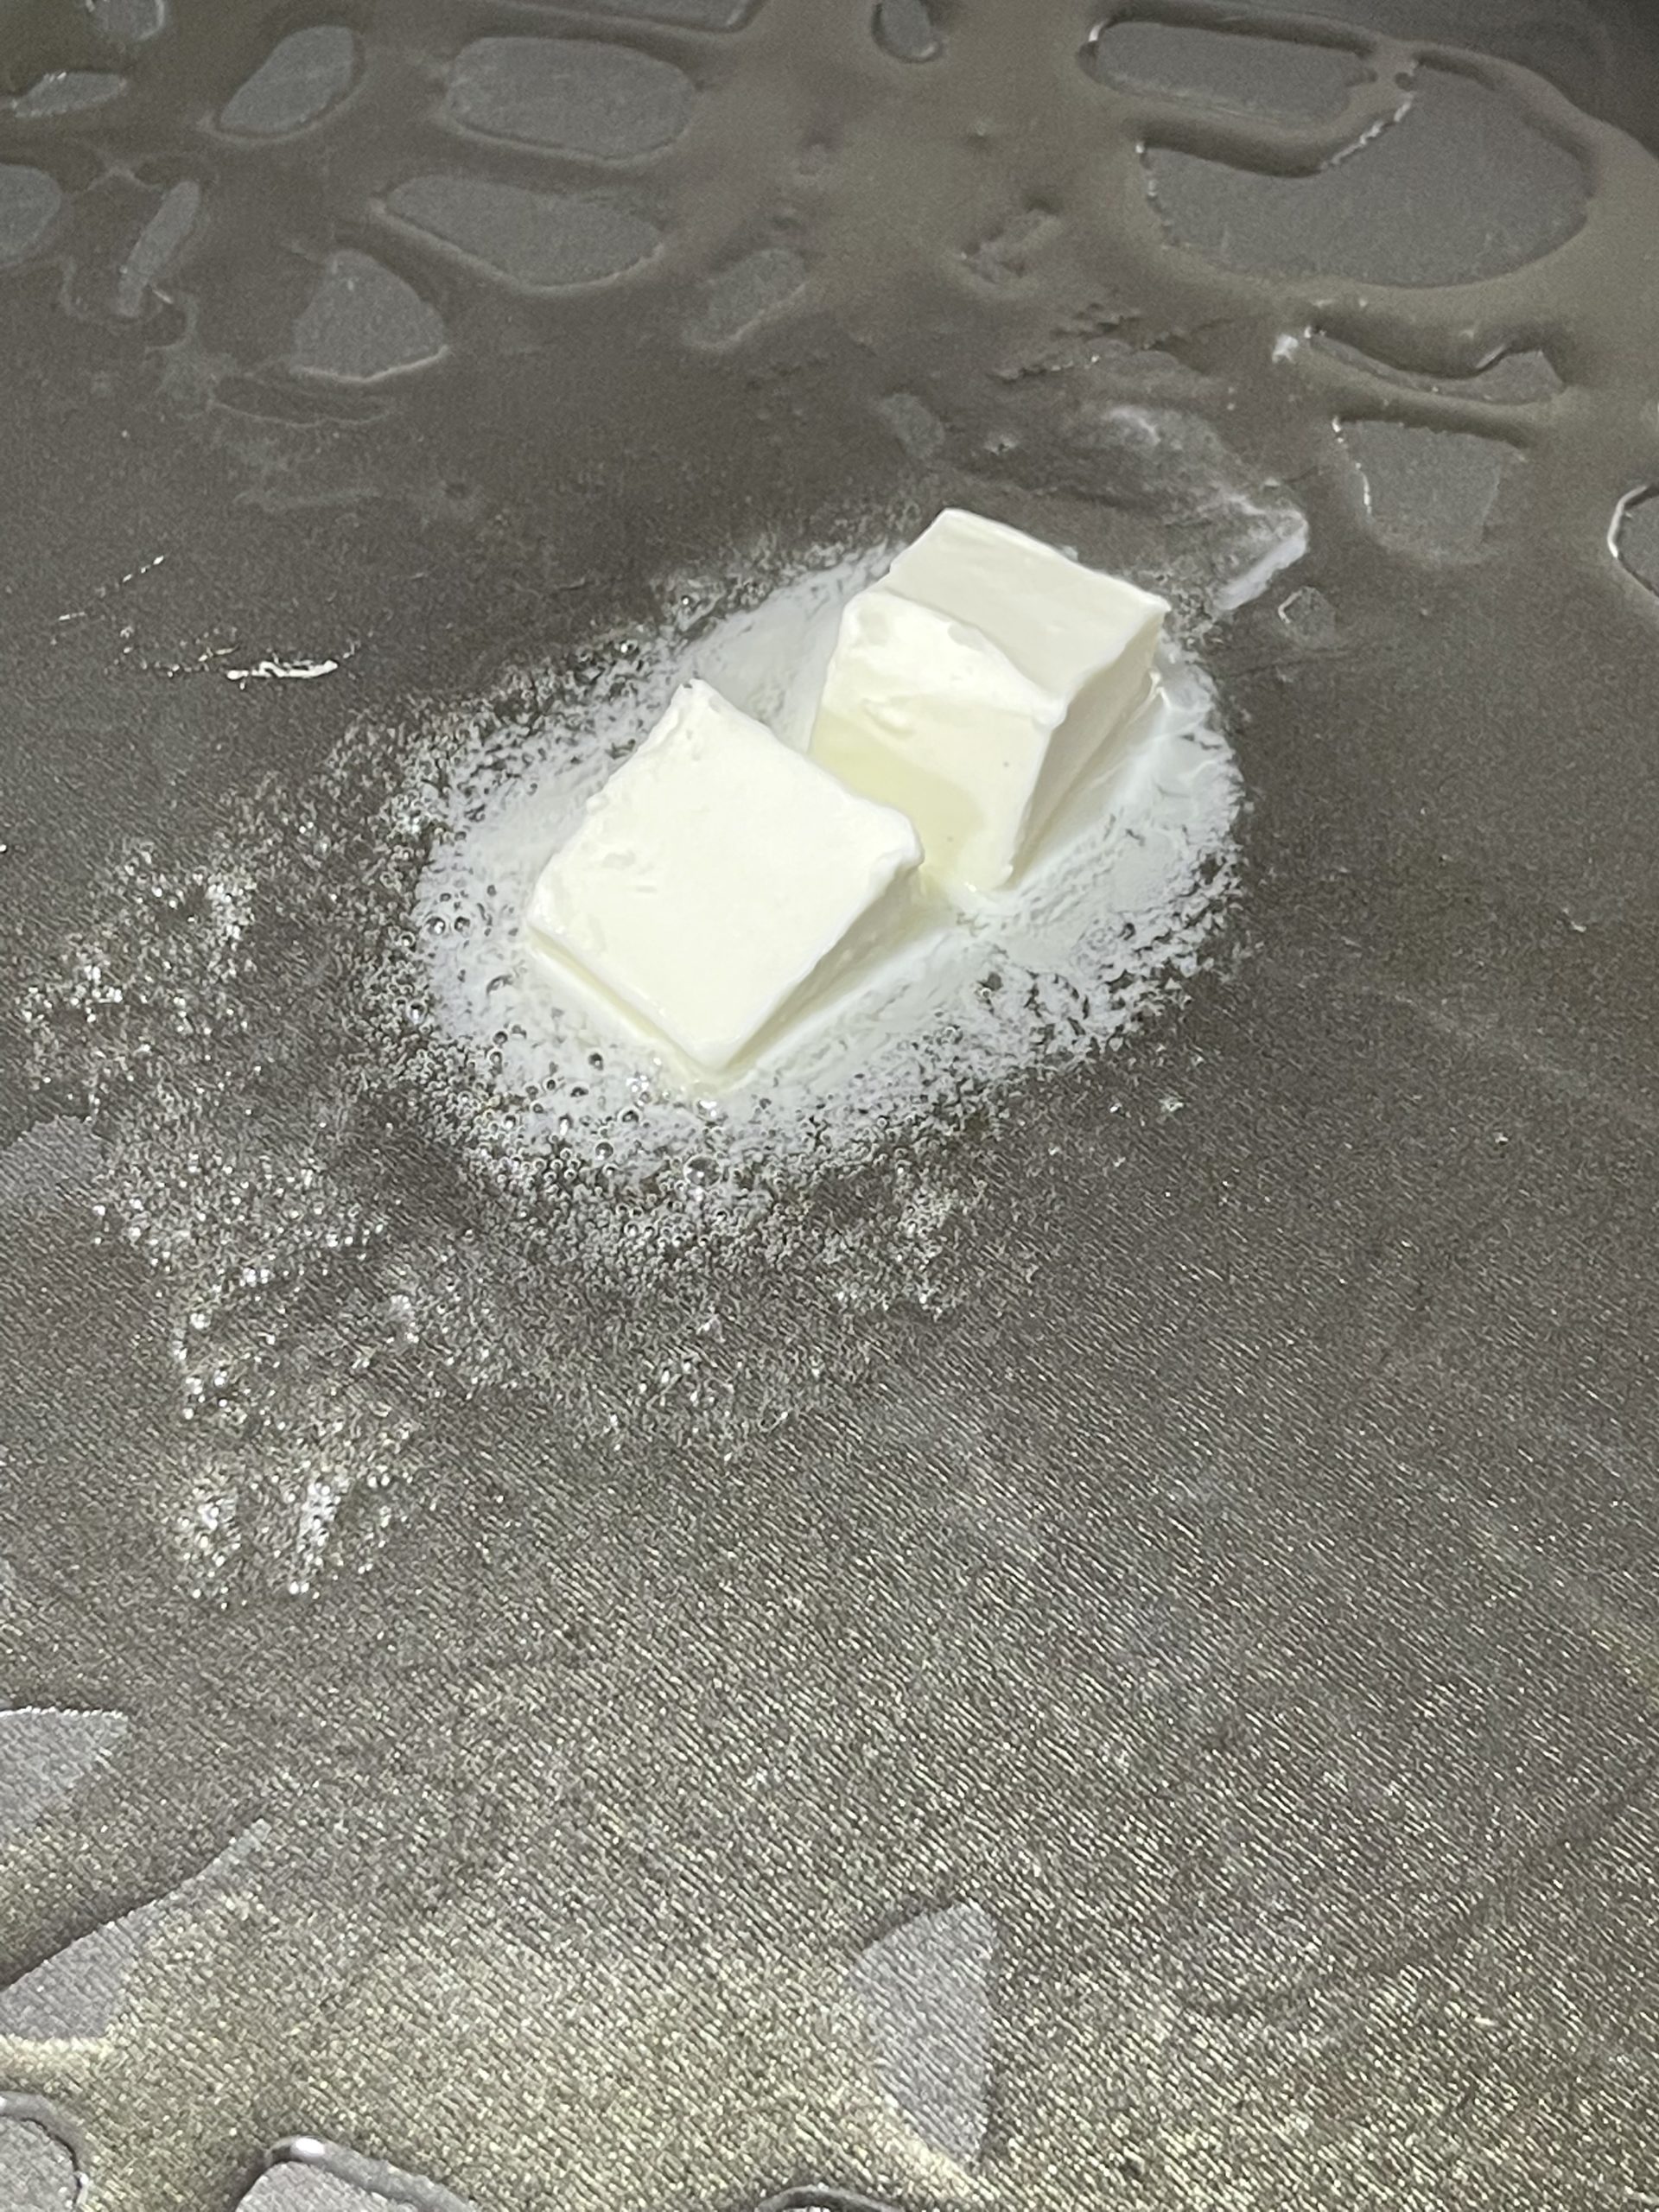 vegan butter melting in a pan